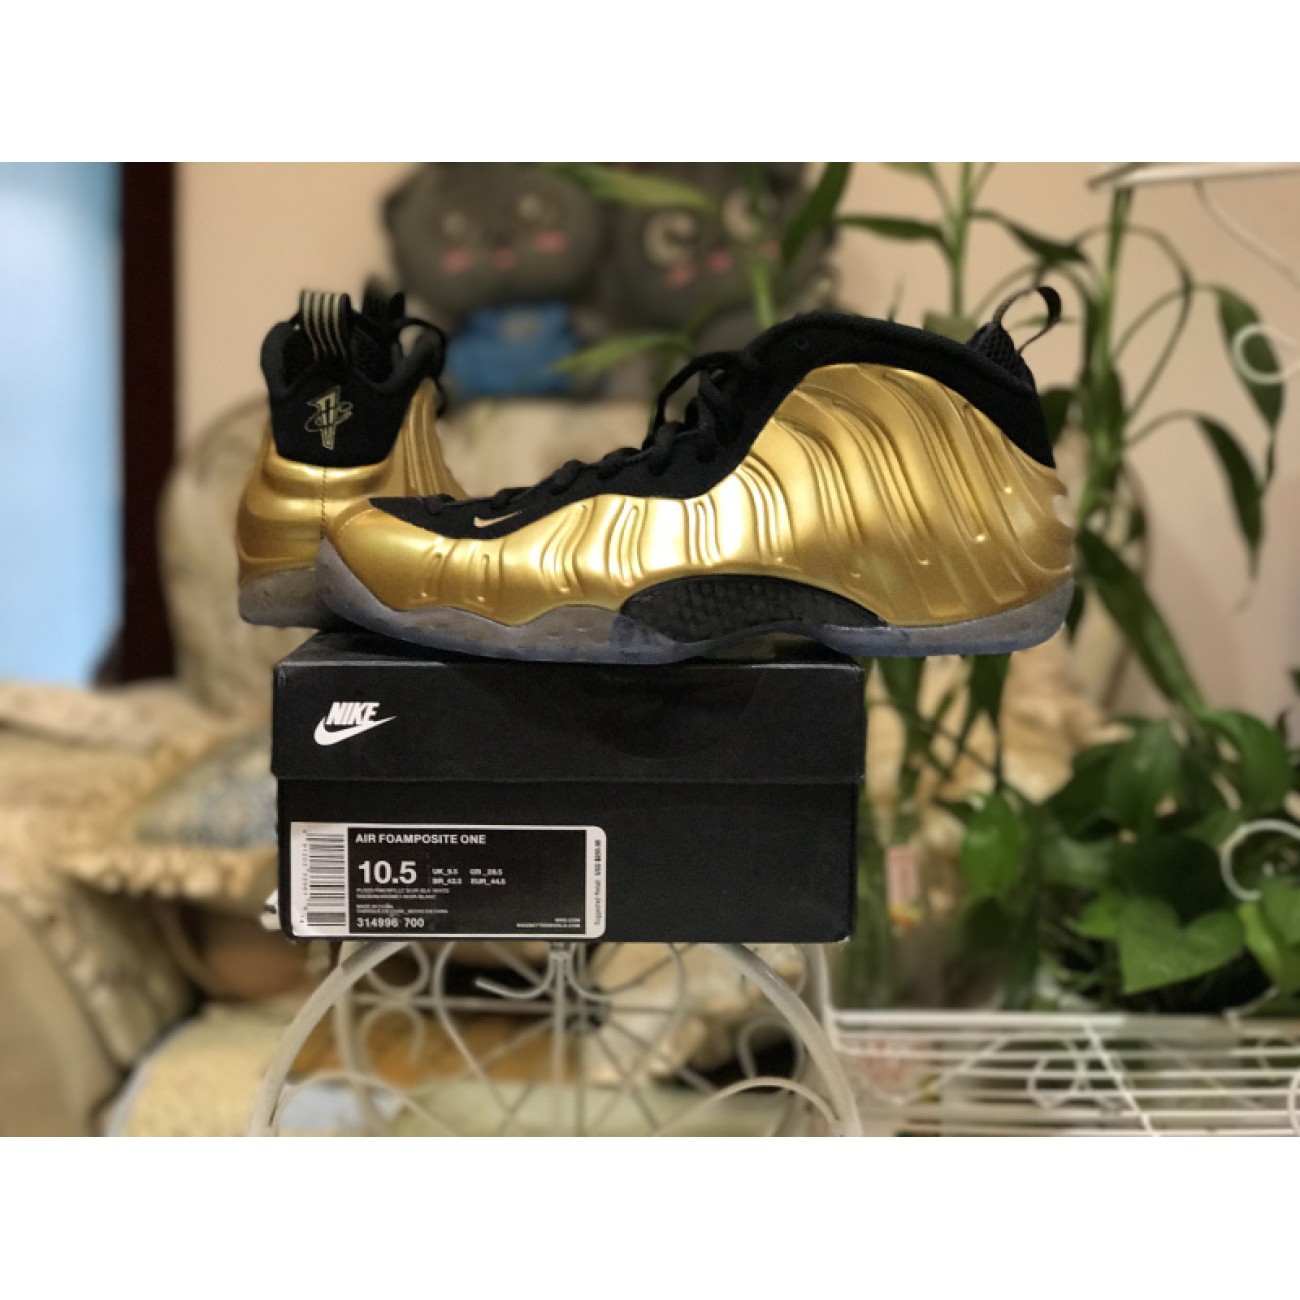 Nike Air Foamposite One "Metallic Gold" 314996-700